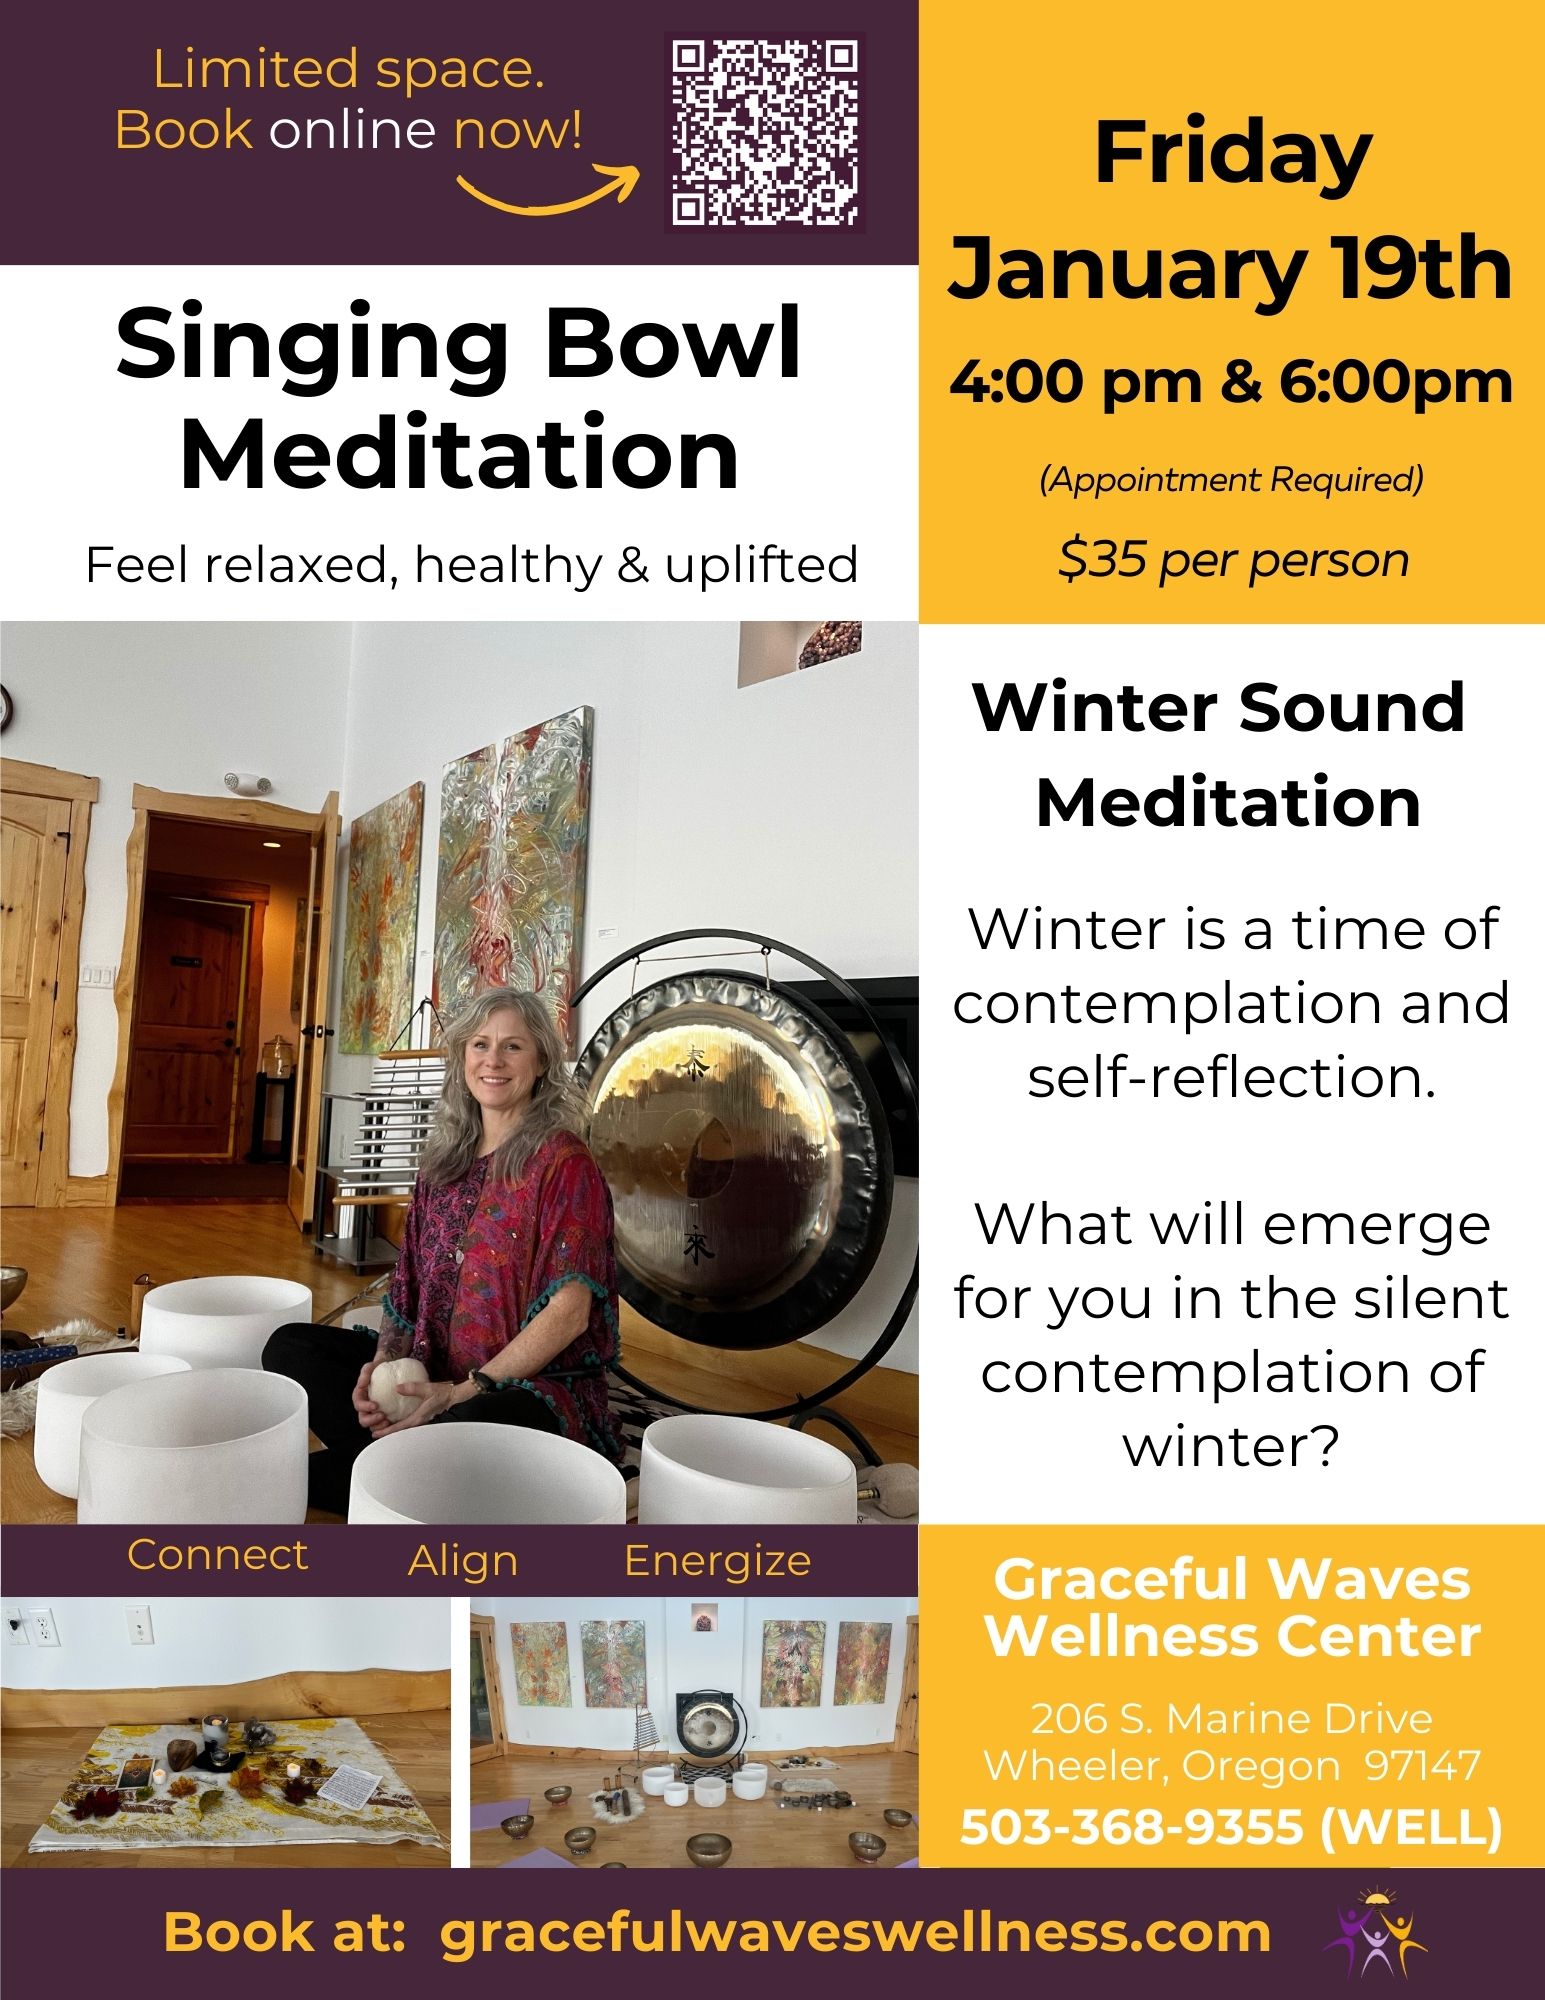 Copy of Singing Bowl Meditation 102023 2 WqEzBs.tmp